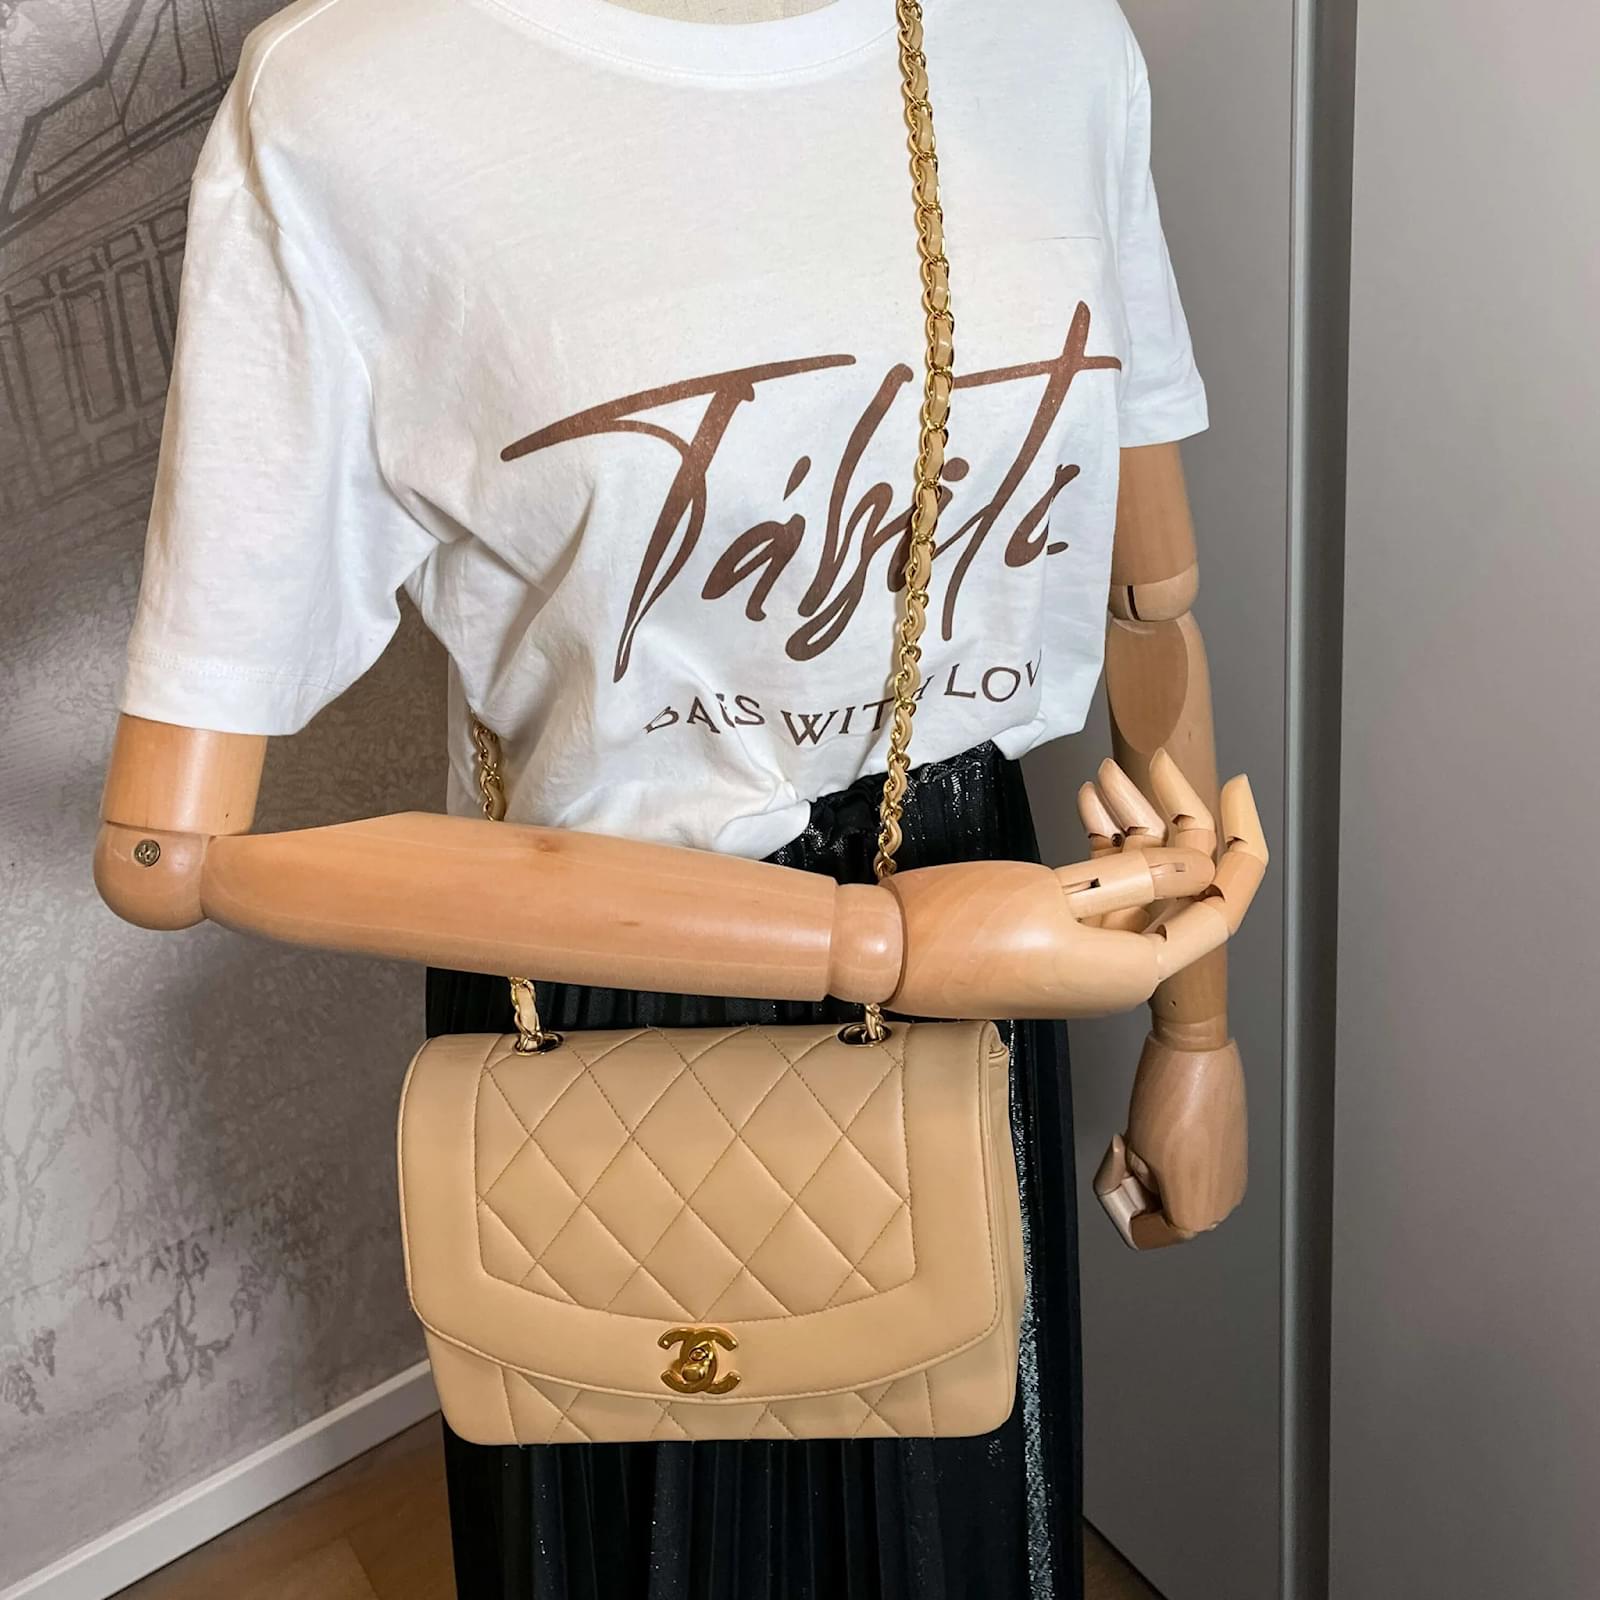 Handbags Chanel Diana Small Lambskin Leather Flap Bag Beige